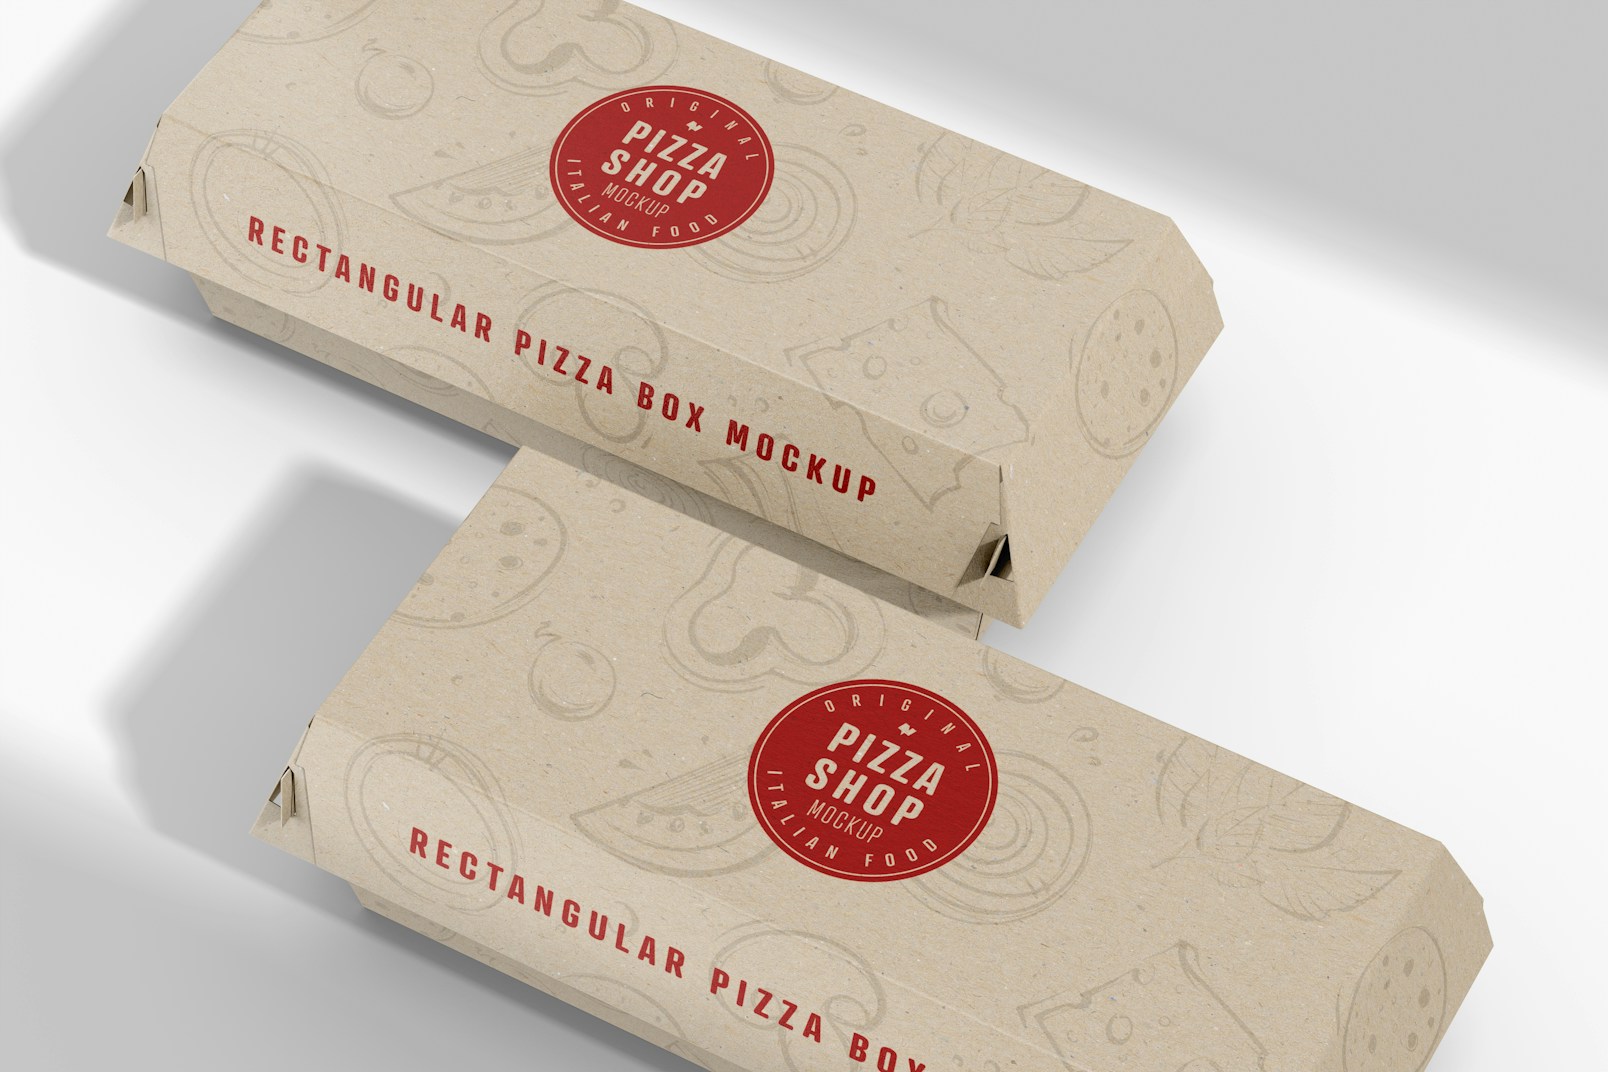 Rectangular Pizza Boxes Mockup 02